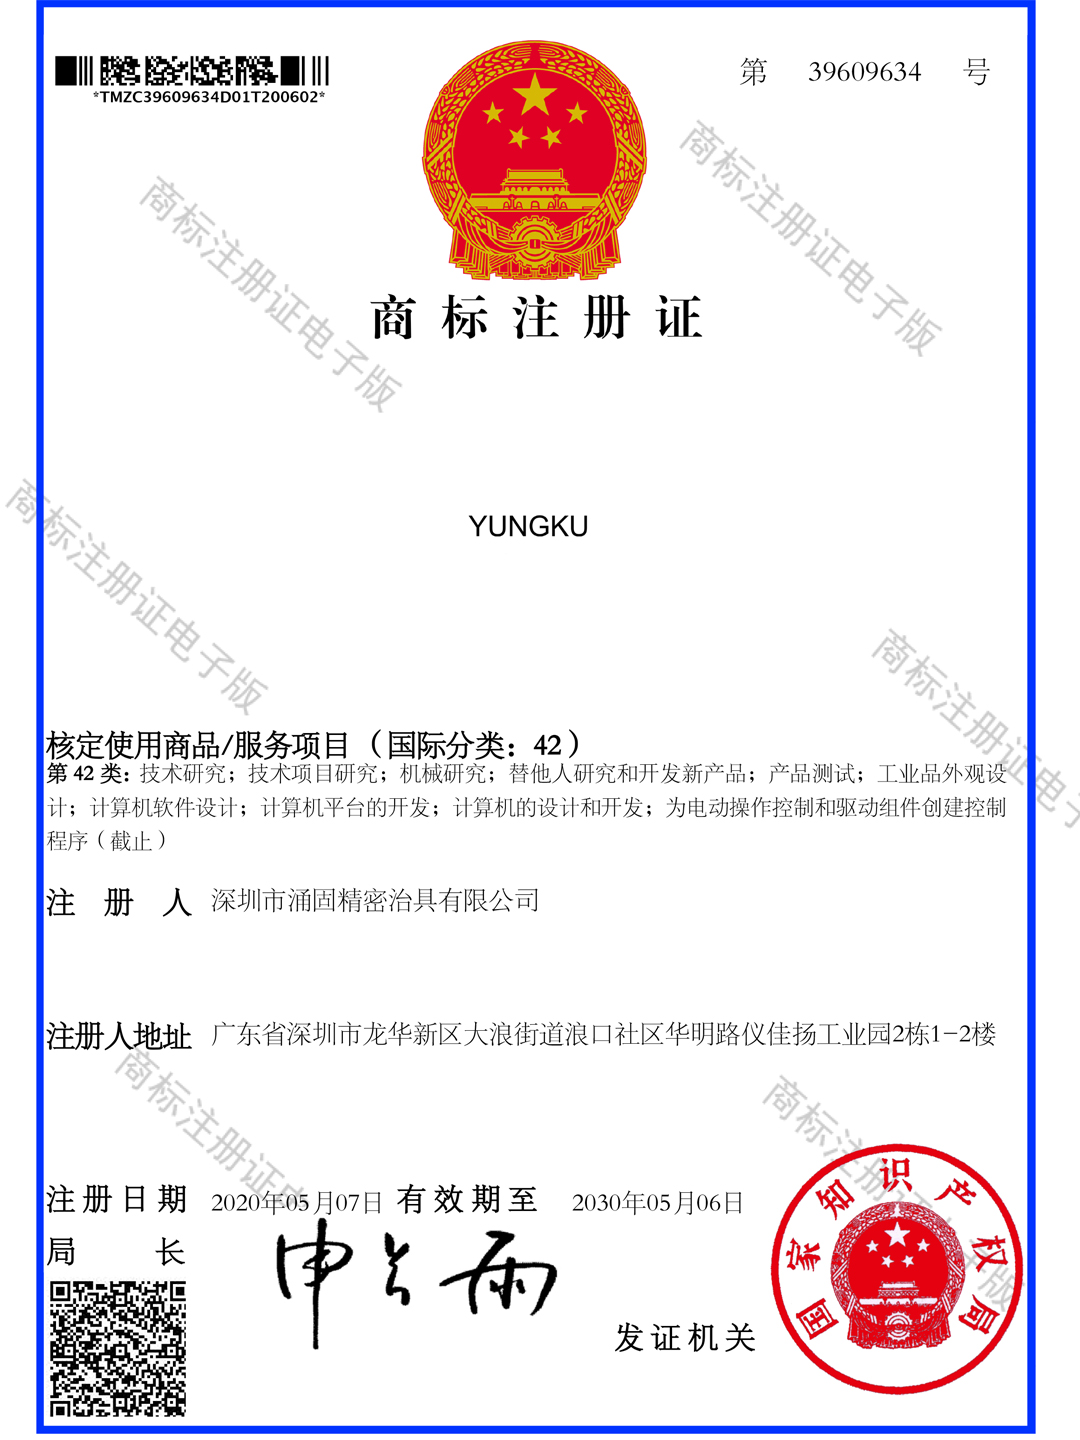 Trademark registration certificate YONGGU